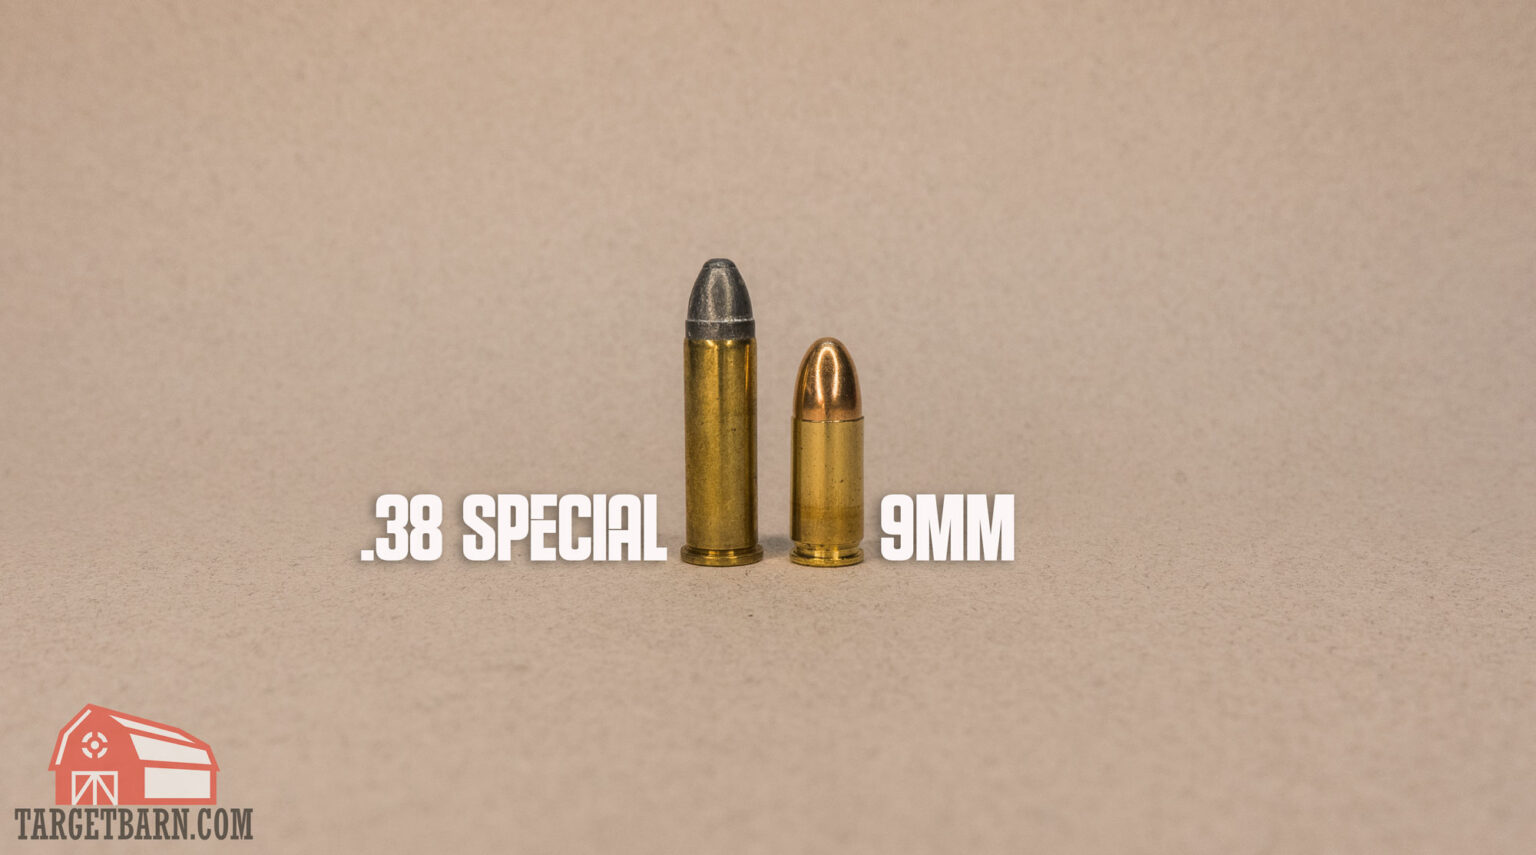 38 Special Vs 9mm Caliber Comparison The Broad Side